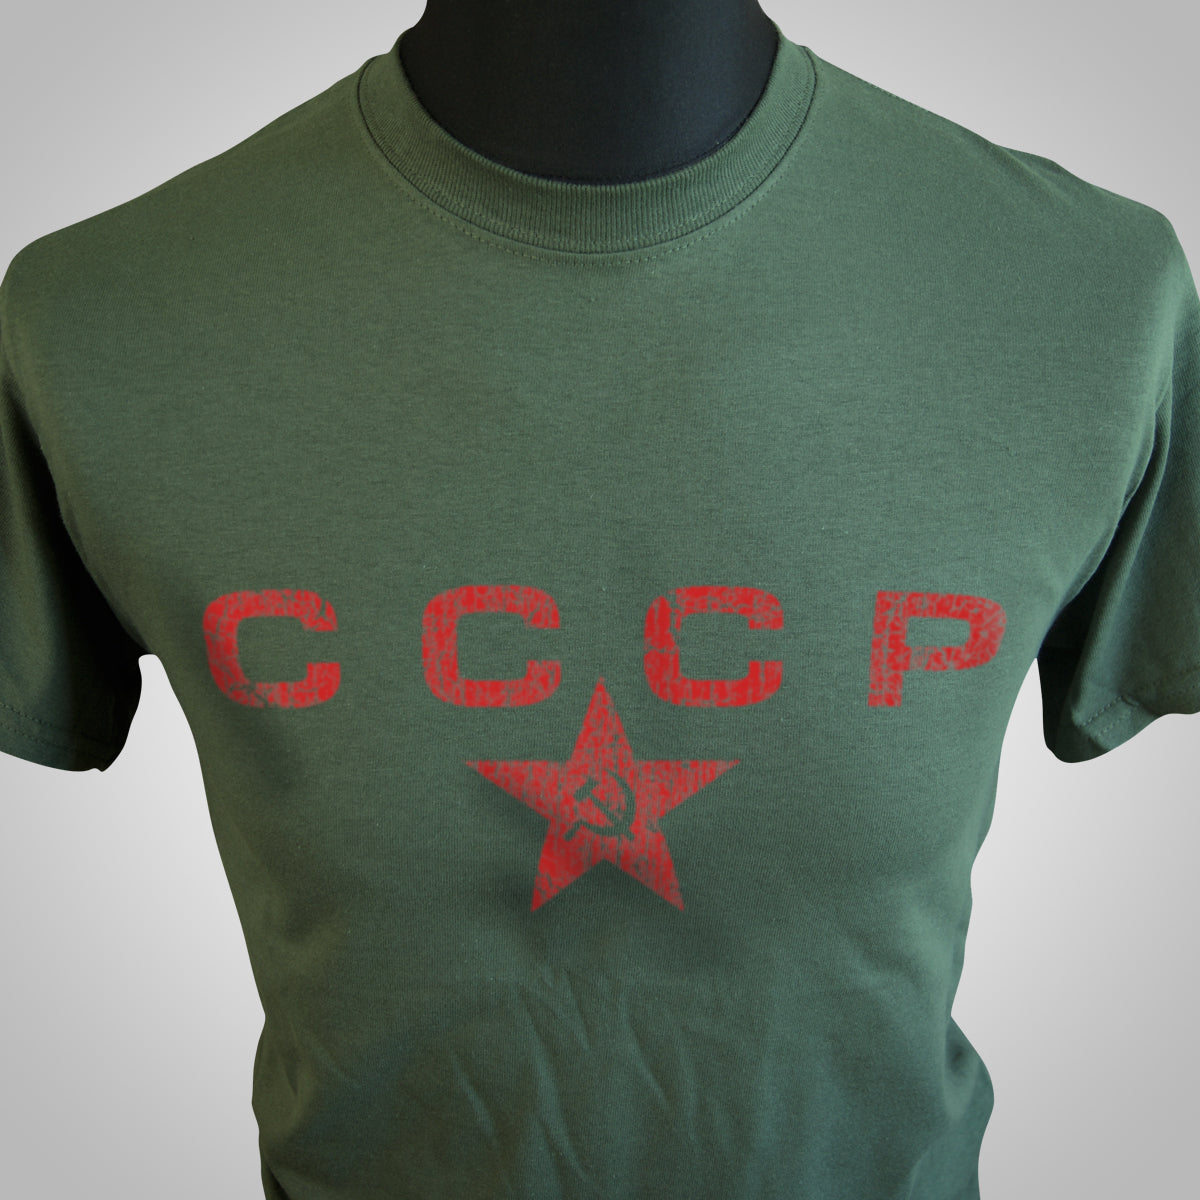 CCCP T Shirt